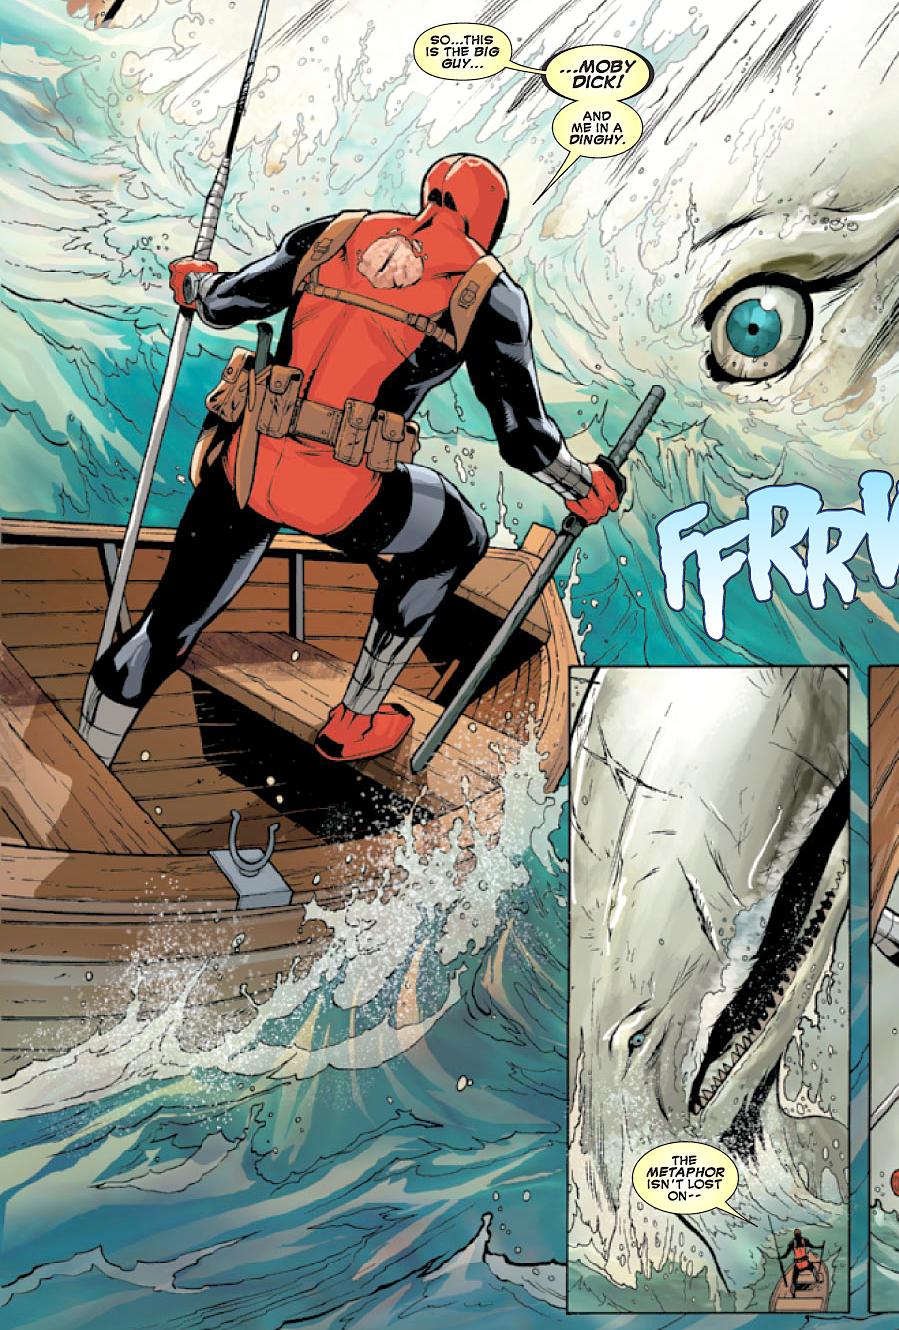 Deadpool, Moby Dick adaptation Marvel's superhero comics